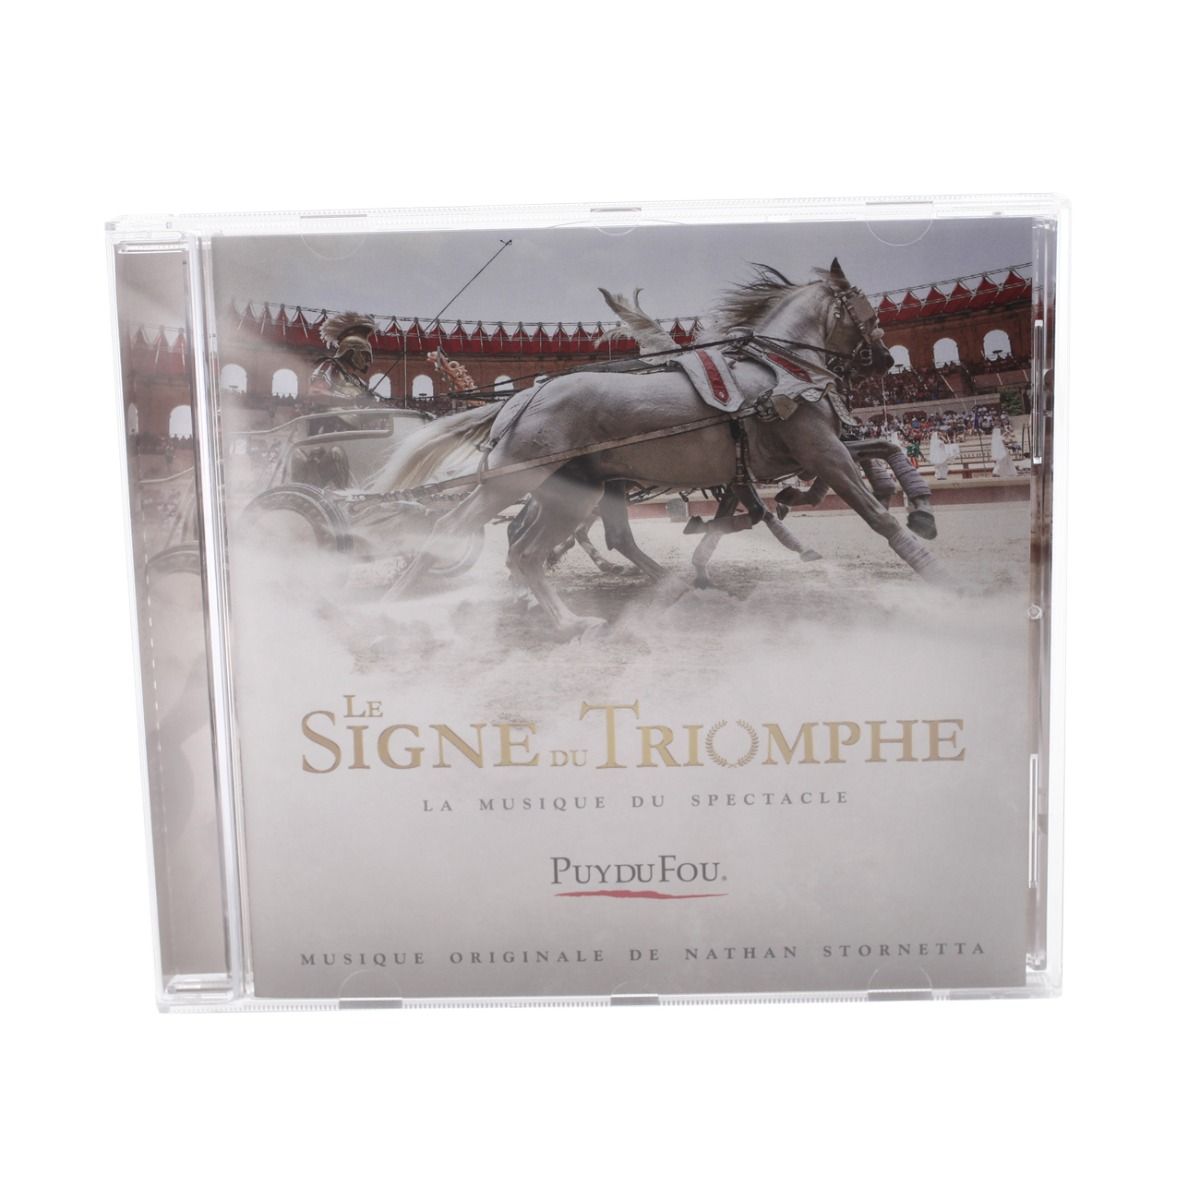 Avant CD Signe du Triomphe